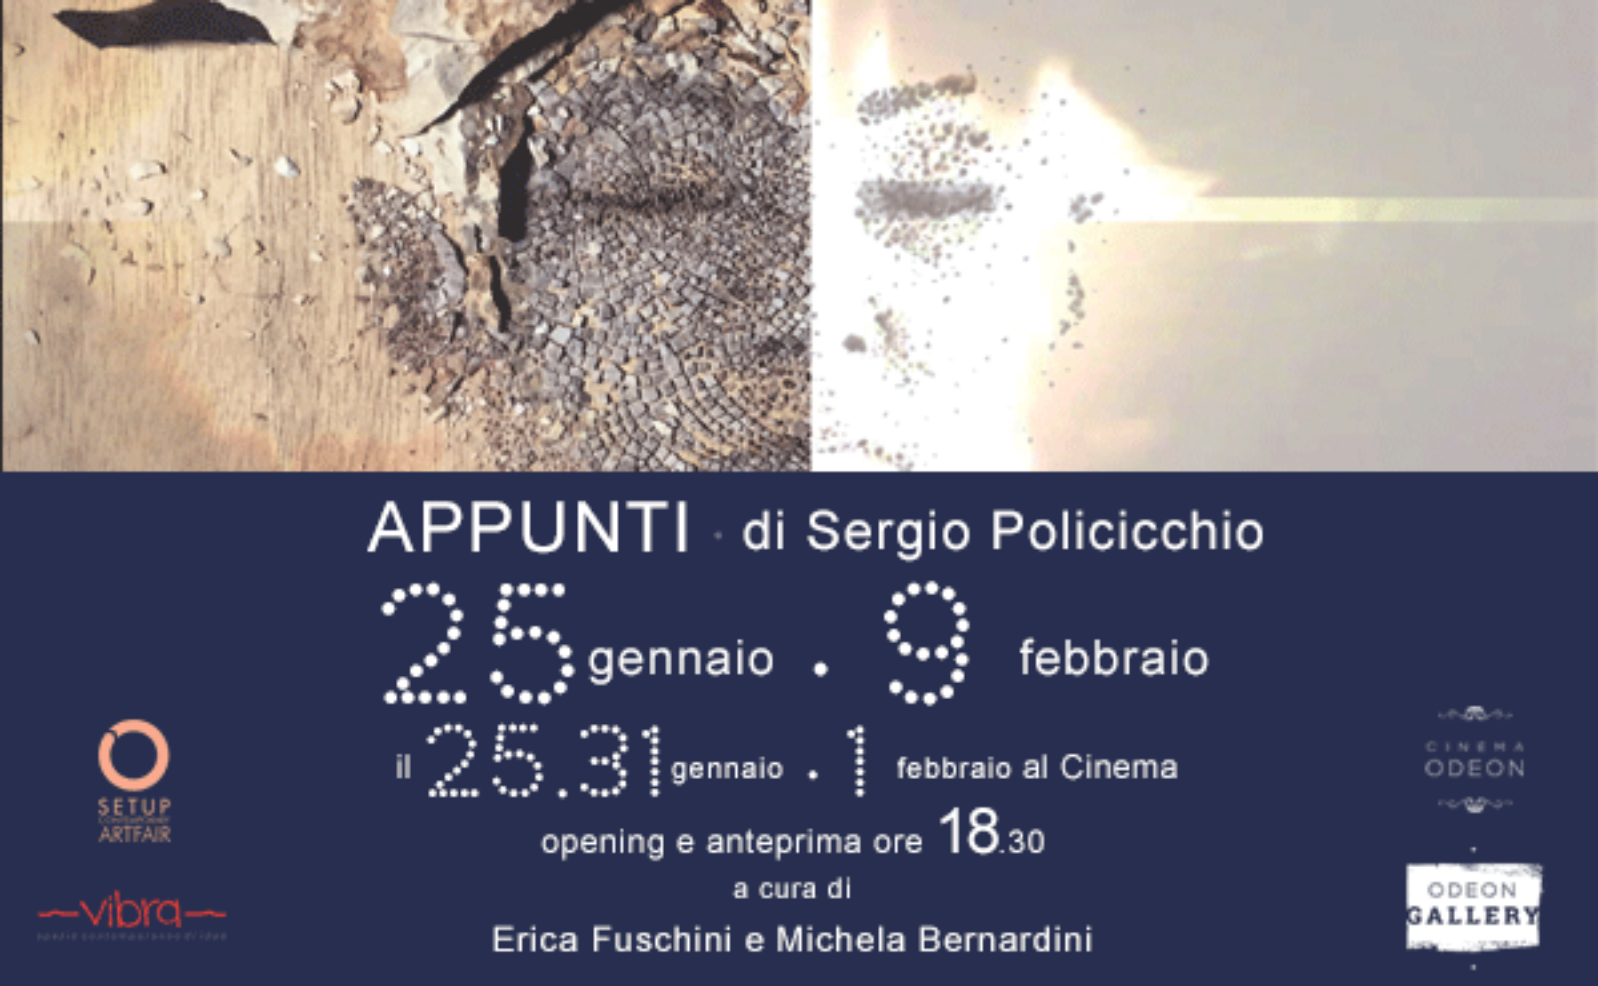 NOTES by Sergio Policicchio